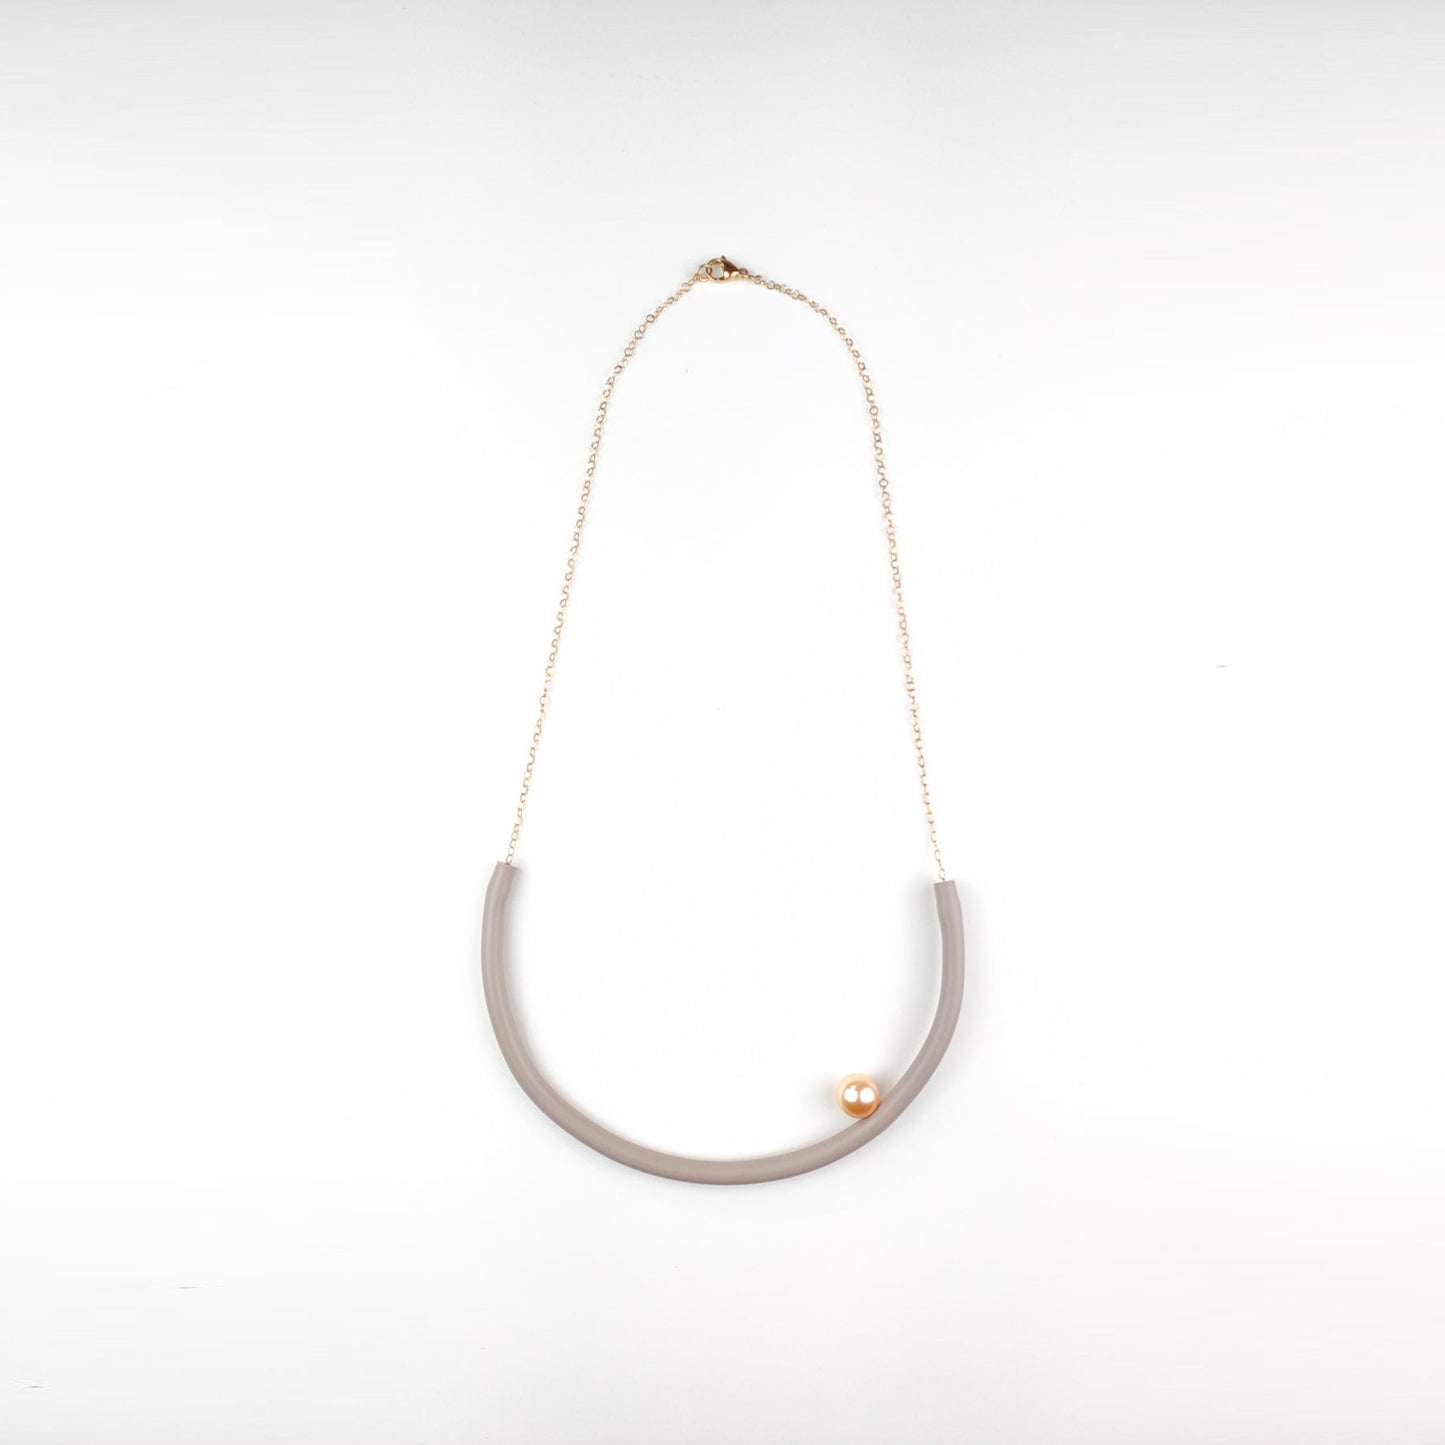 BILICO round necklace - sand color / violet pearl